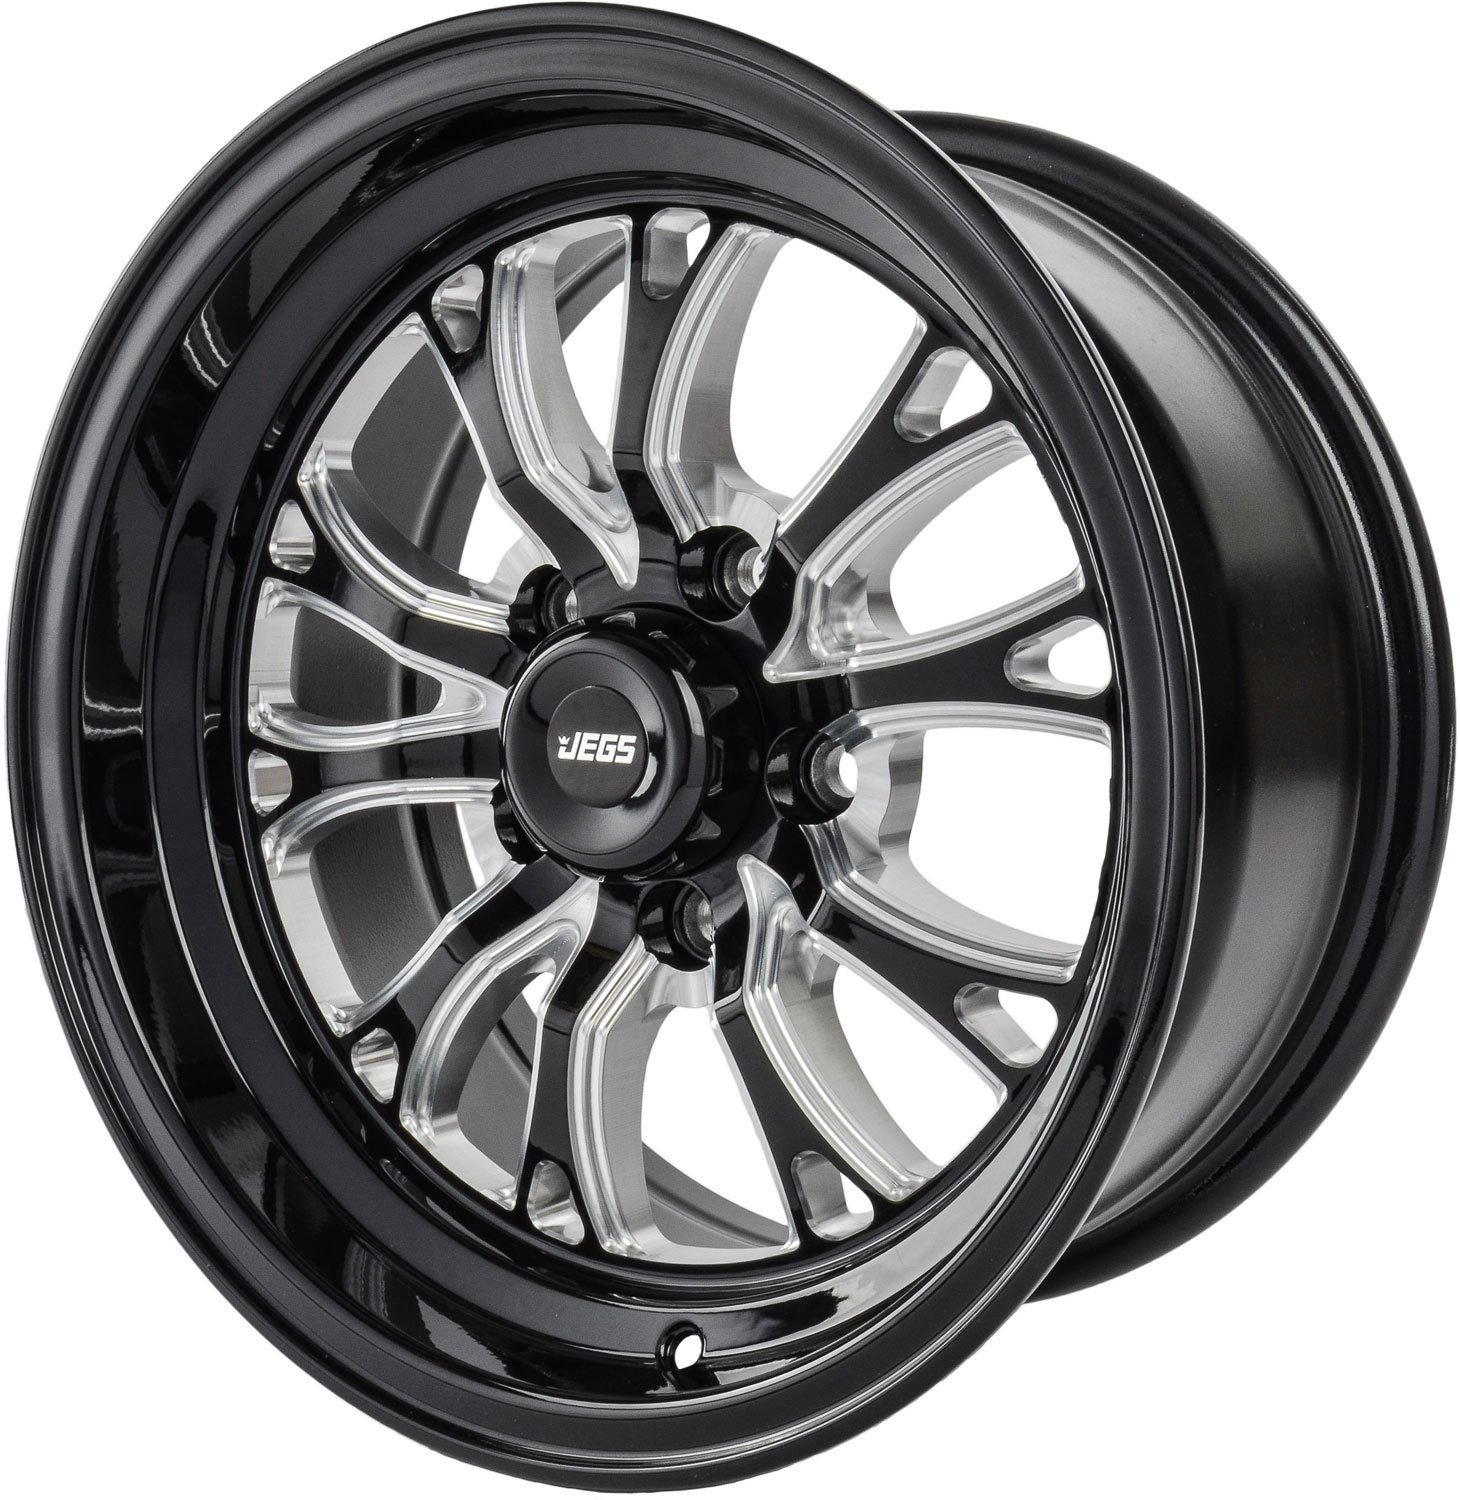 SSR Spike Wheel [Size: 15" x 7"] Gloss Black